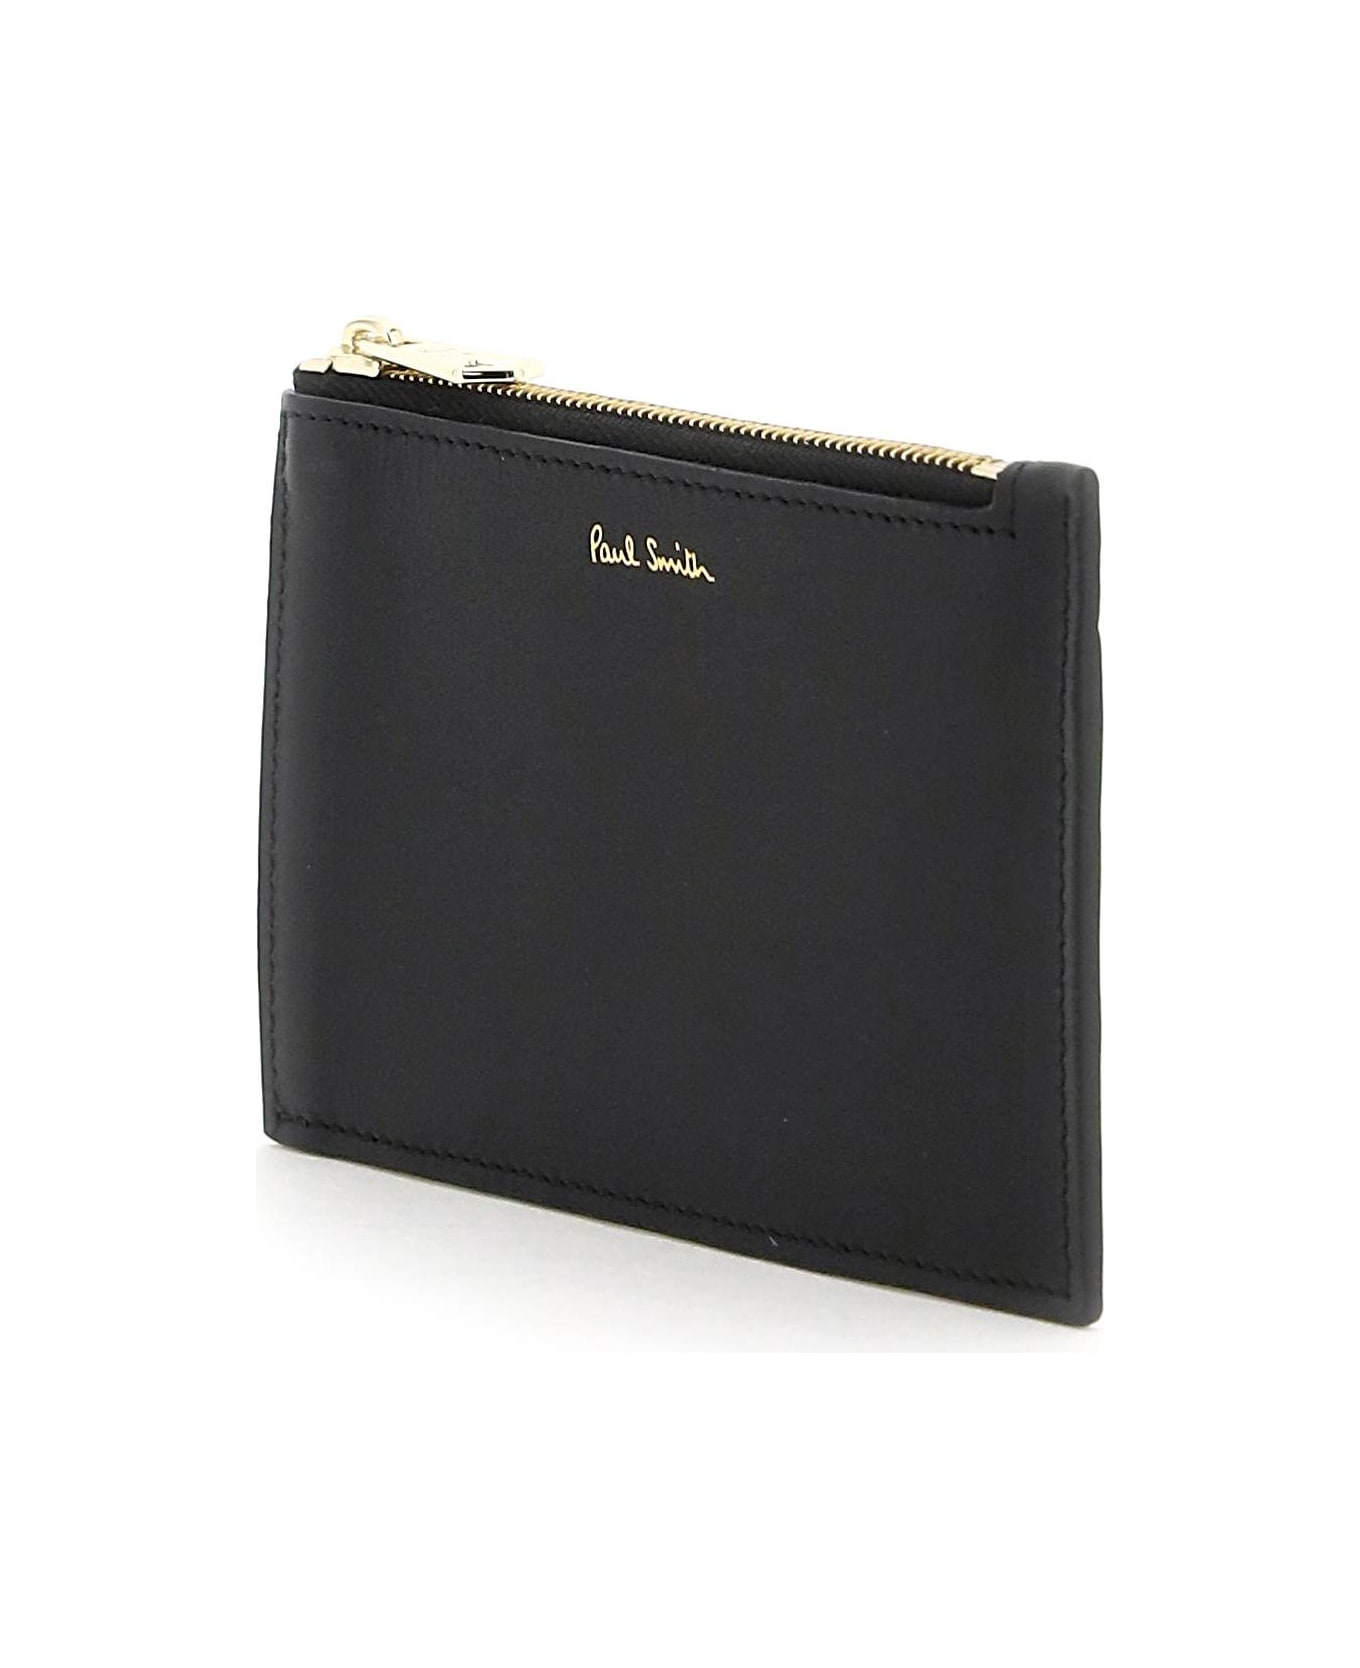 Paul Smith Signature Stripe Leather Card Holder - BLACK (Black)